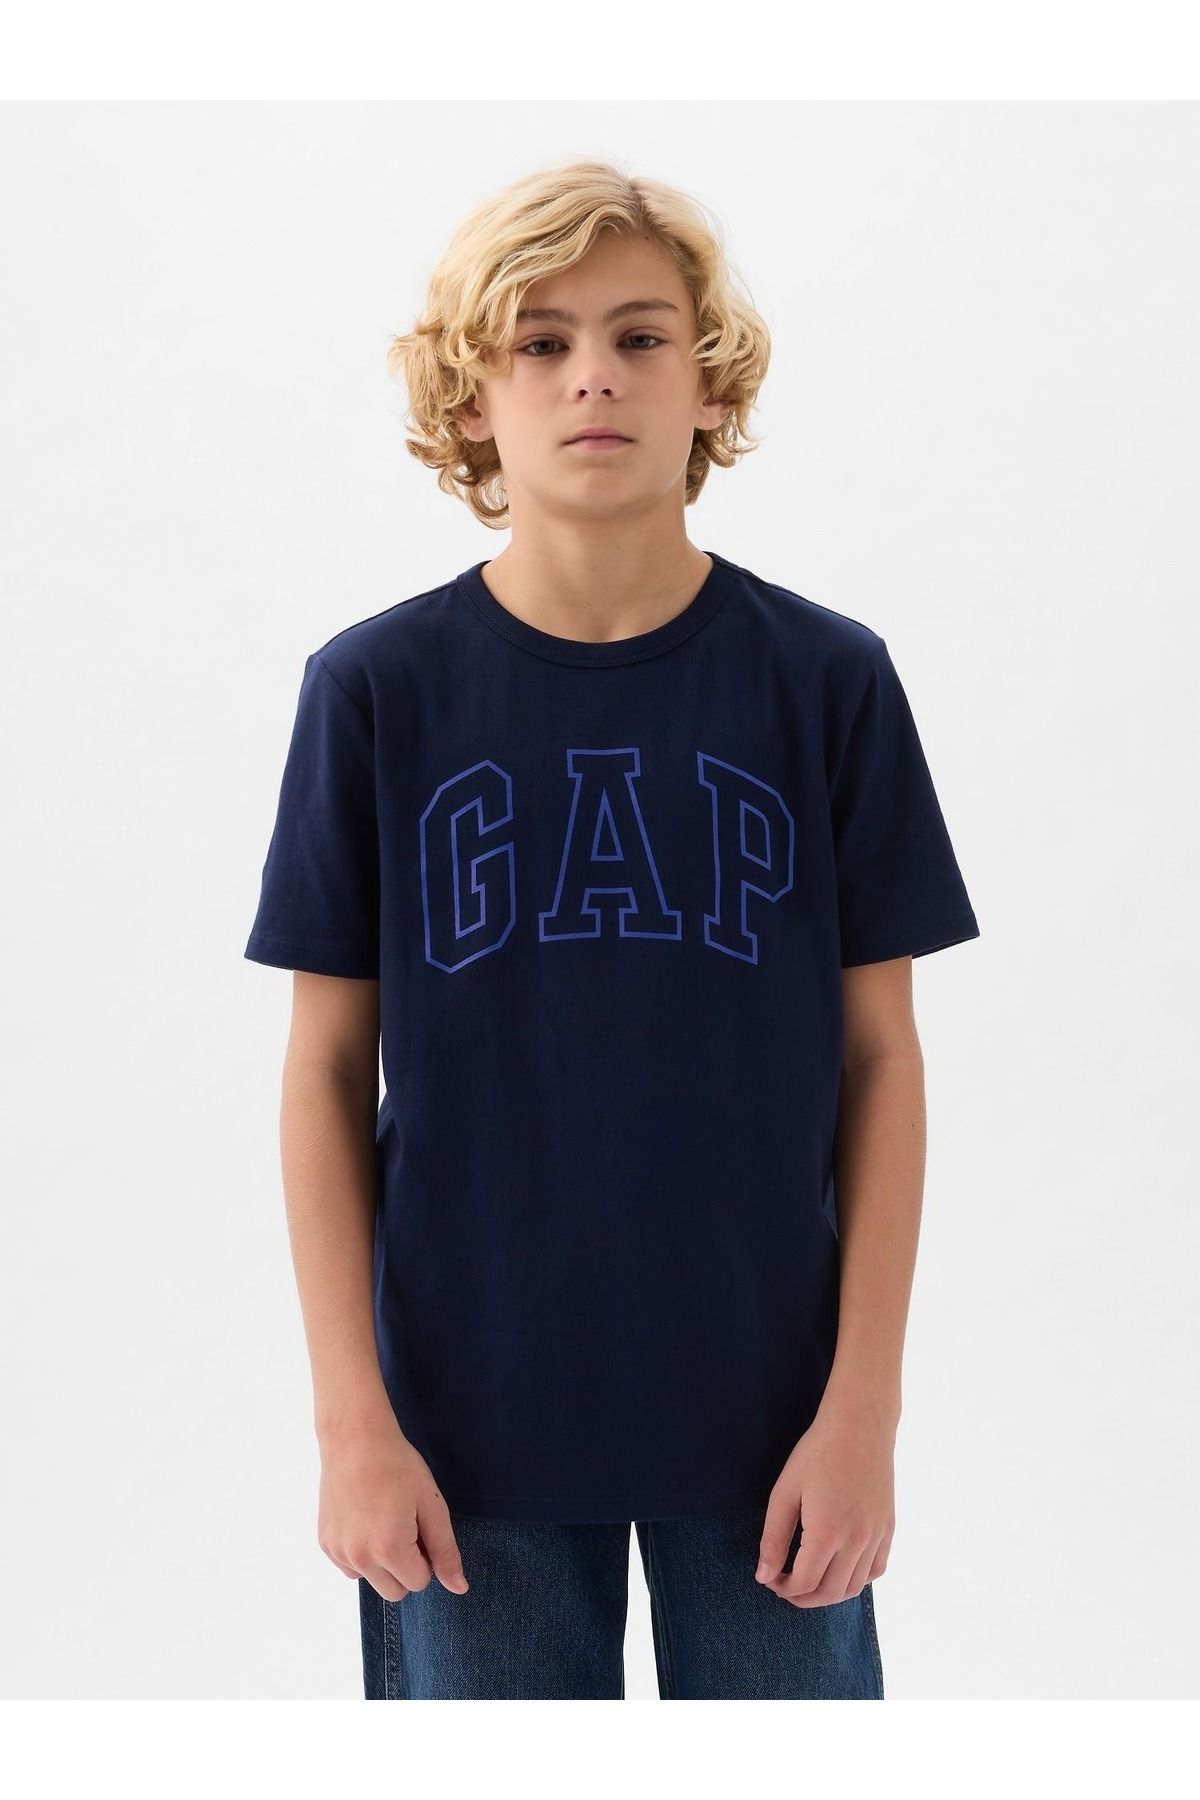 GAP Erkek Çocuk Lacivert Gap Logo T-Shirt